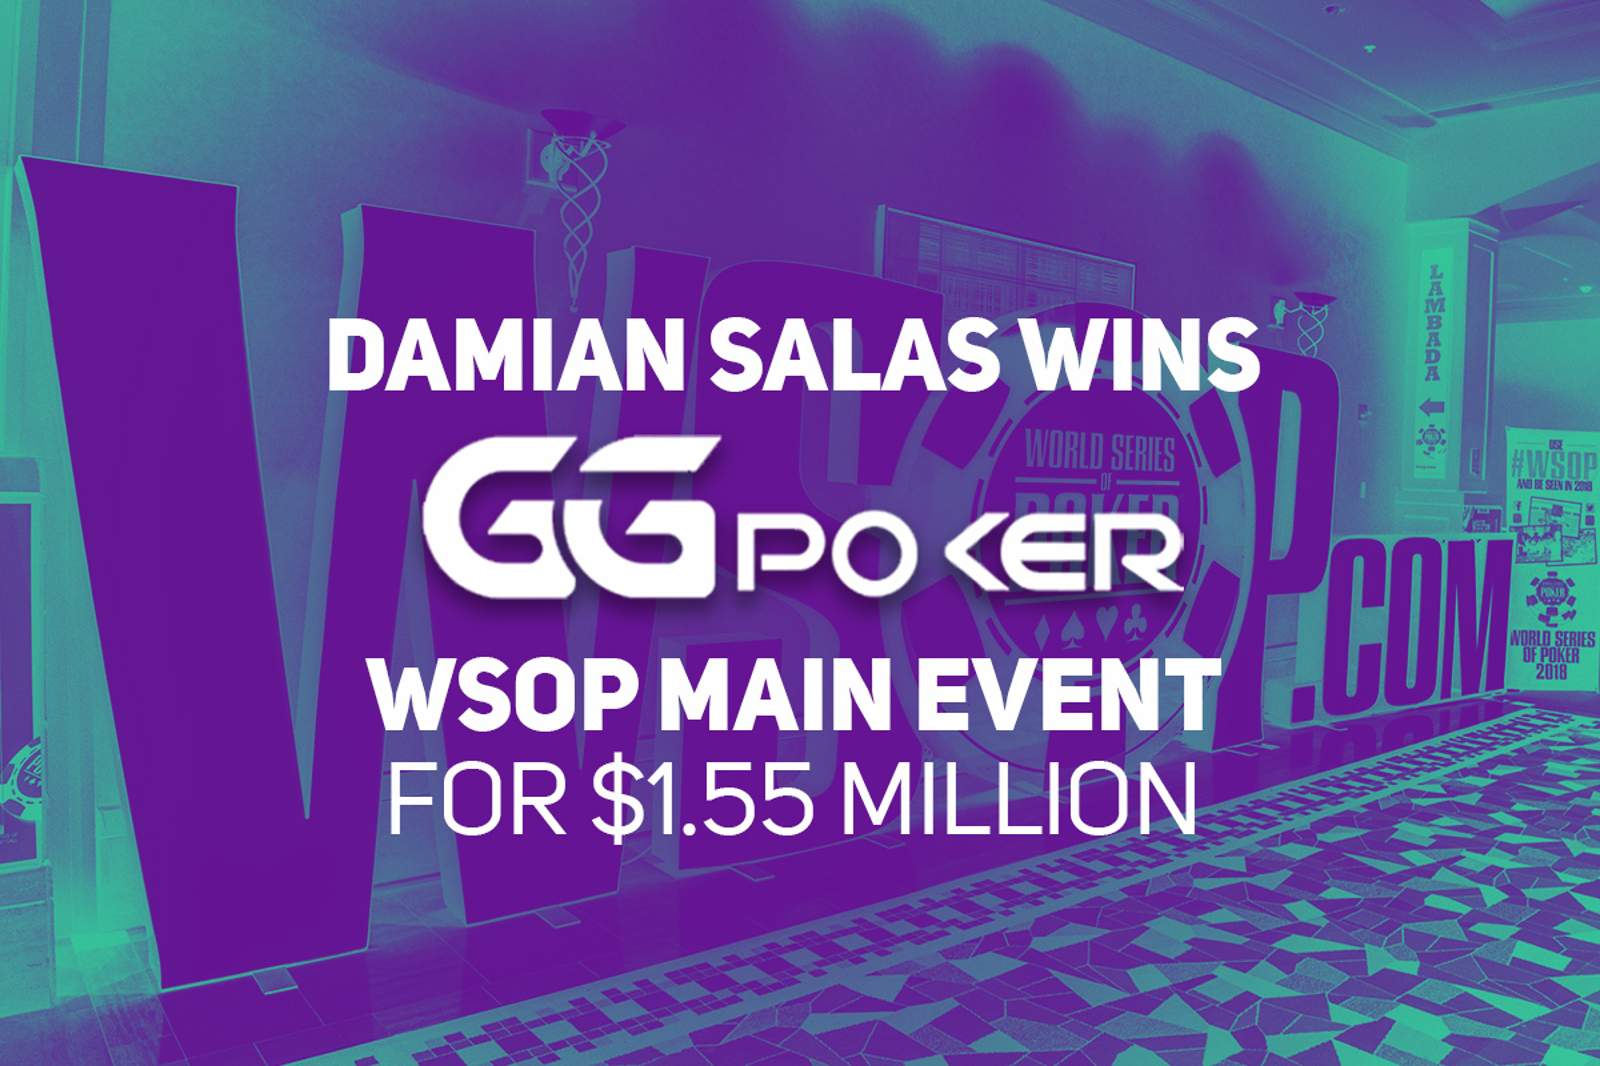 Damian Salas Wins International GGPoker 2020 WSOP Main Event for $1,550,969